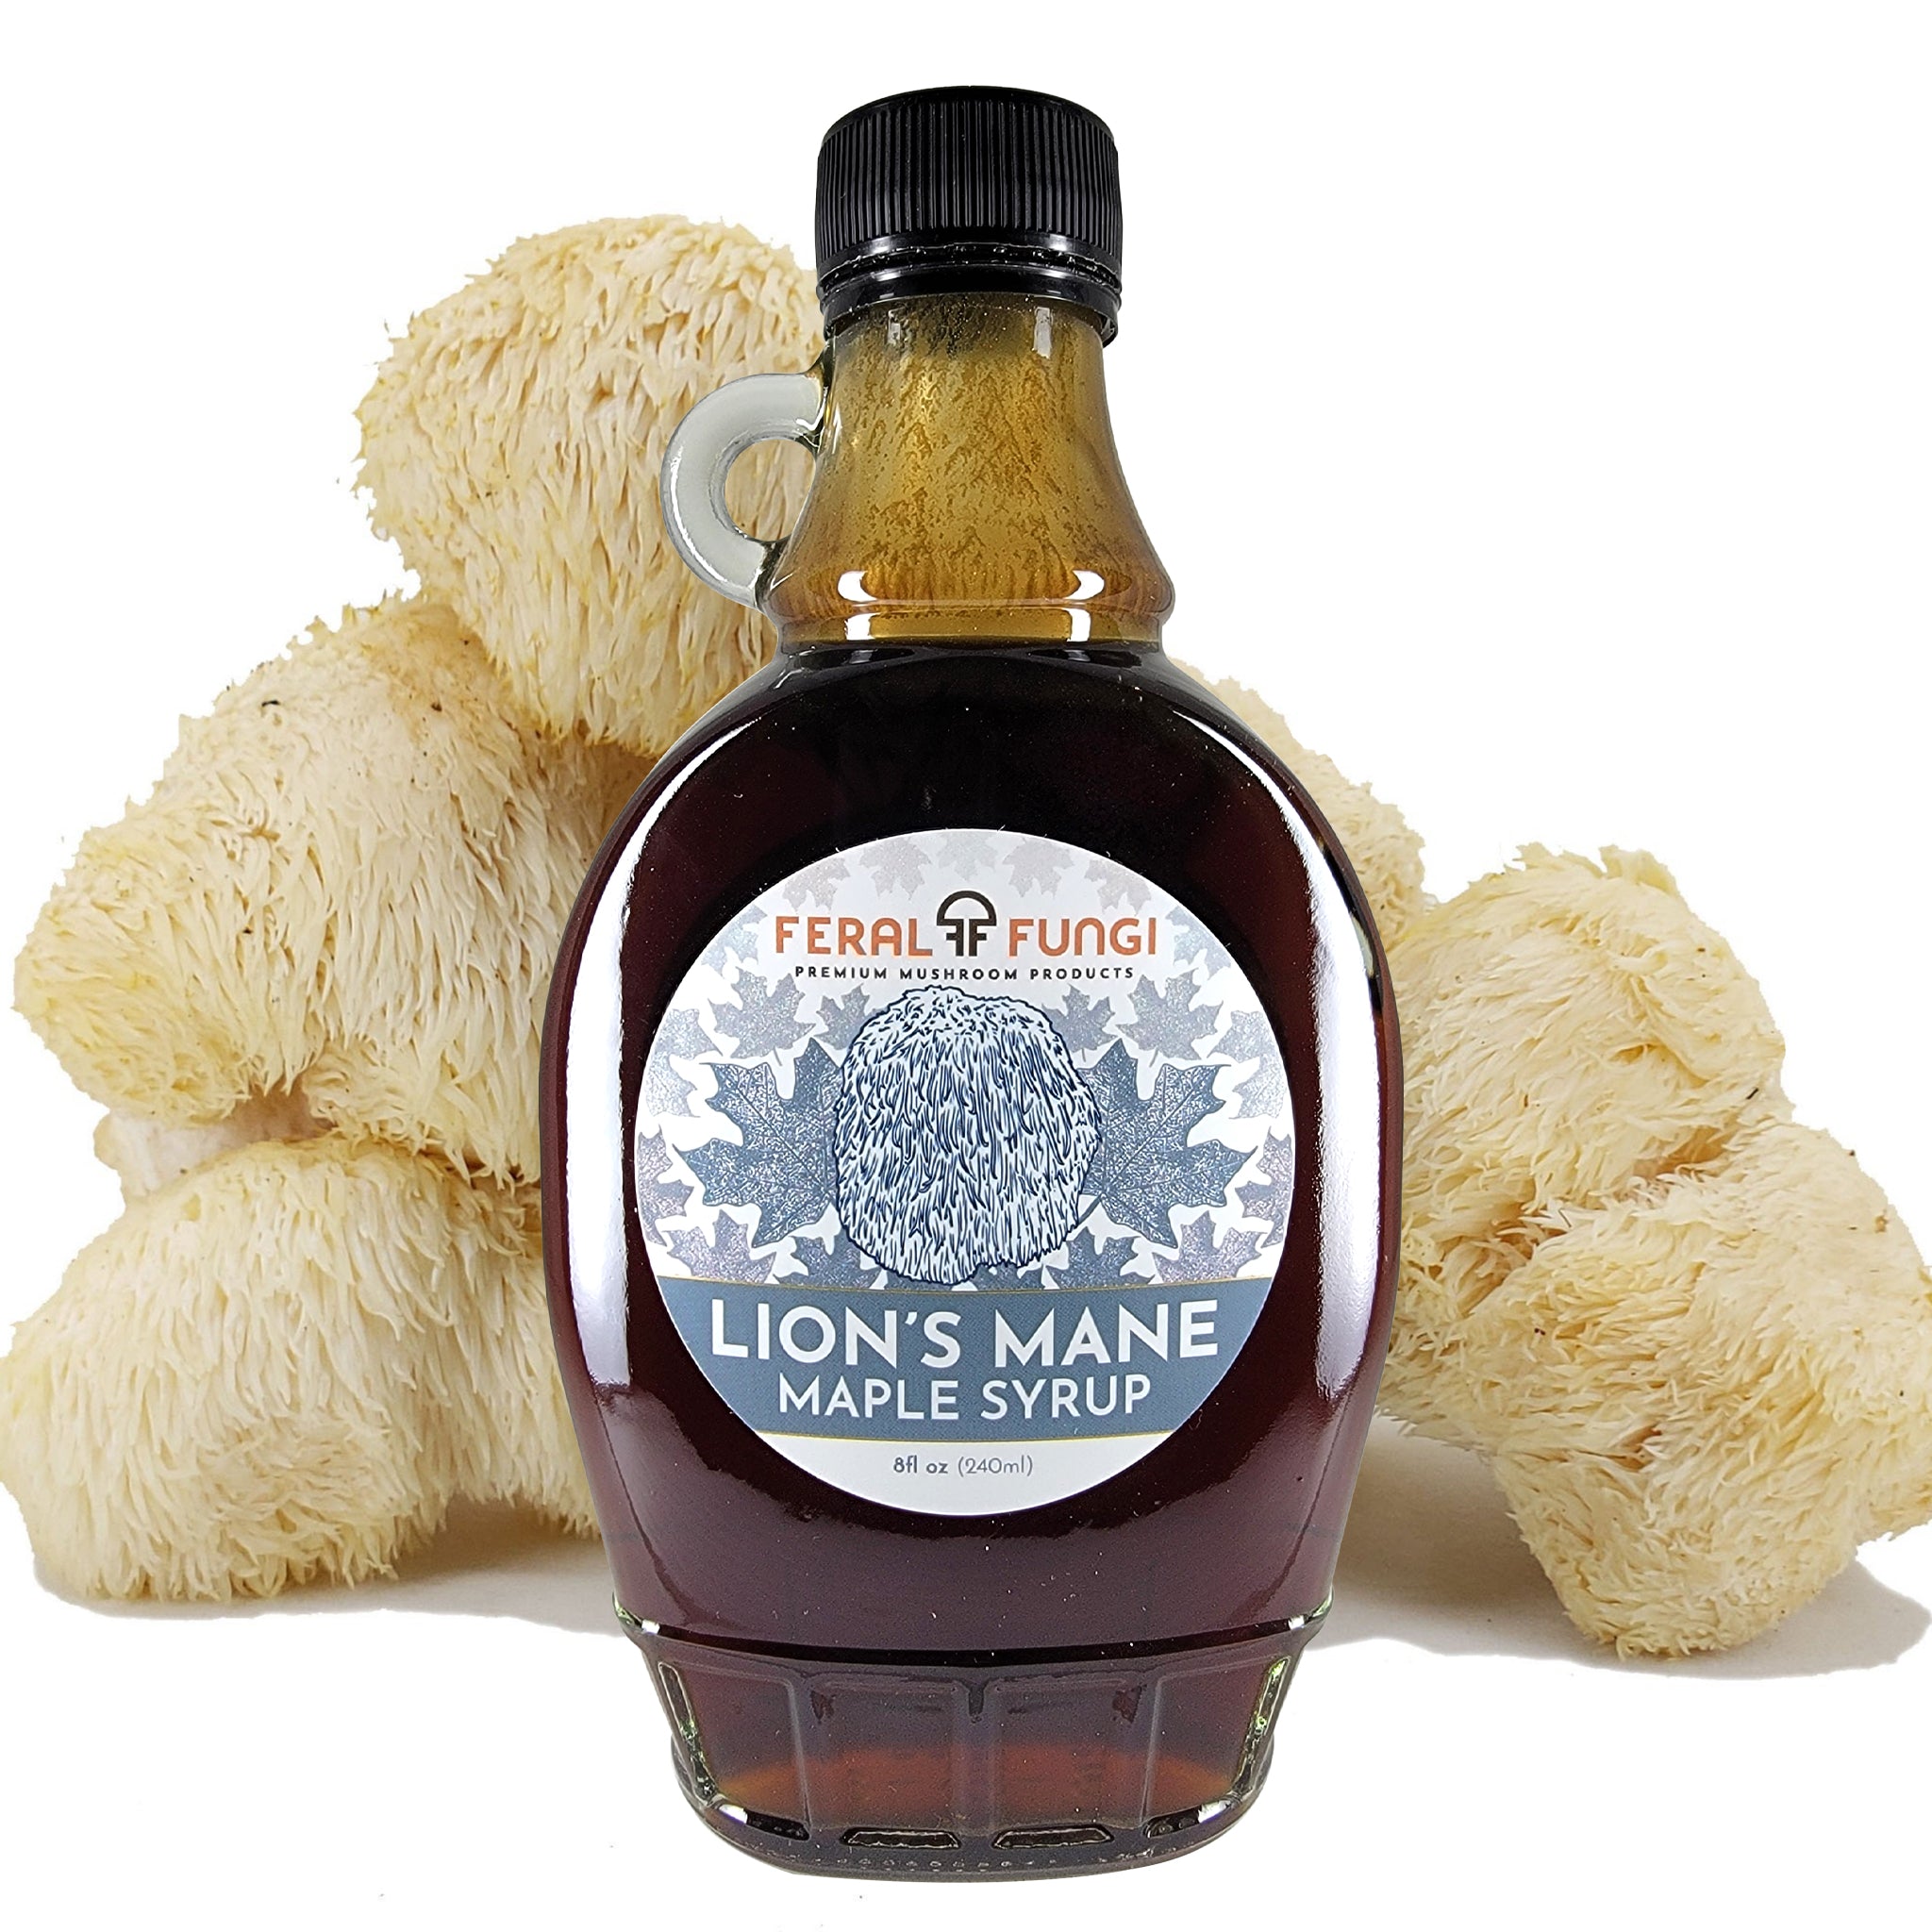 Lion's Mane Maple Syrup - Mushroom Maple Syrup